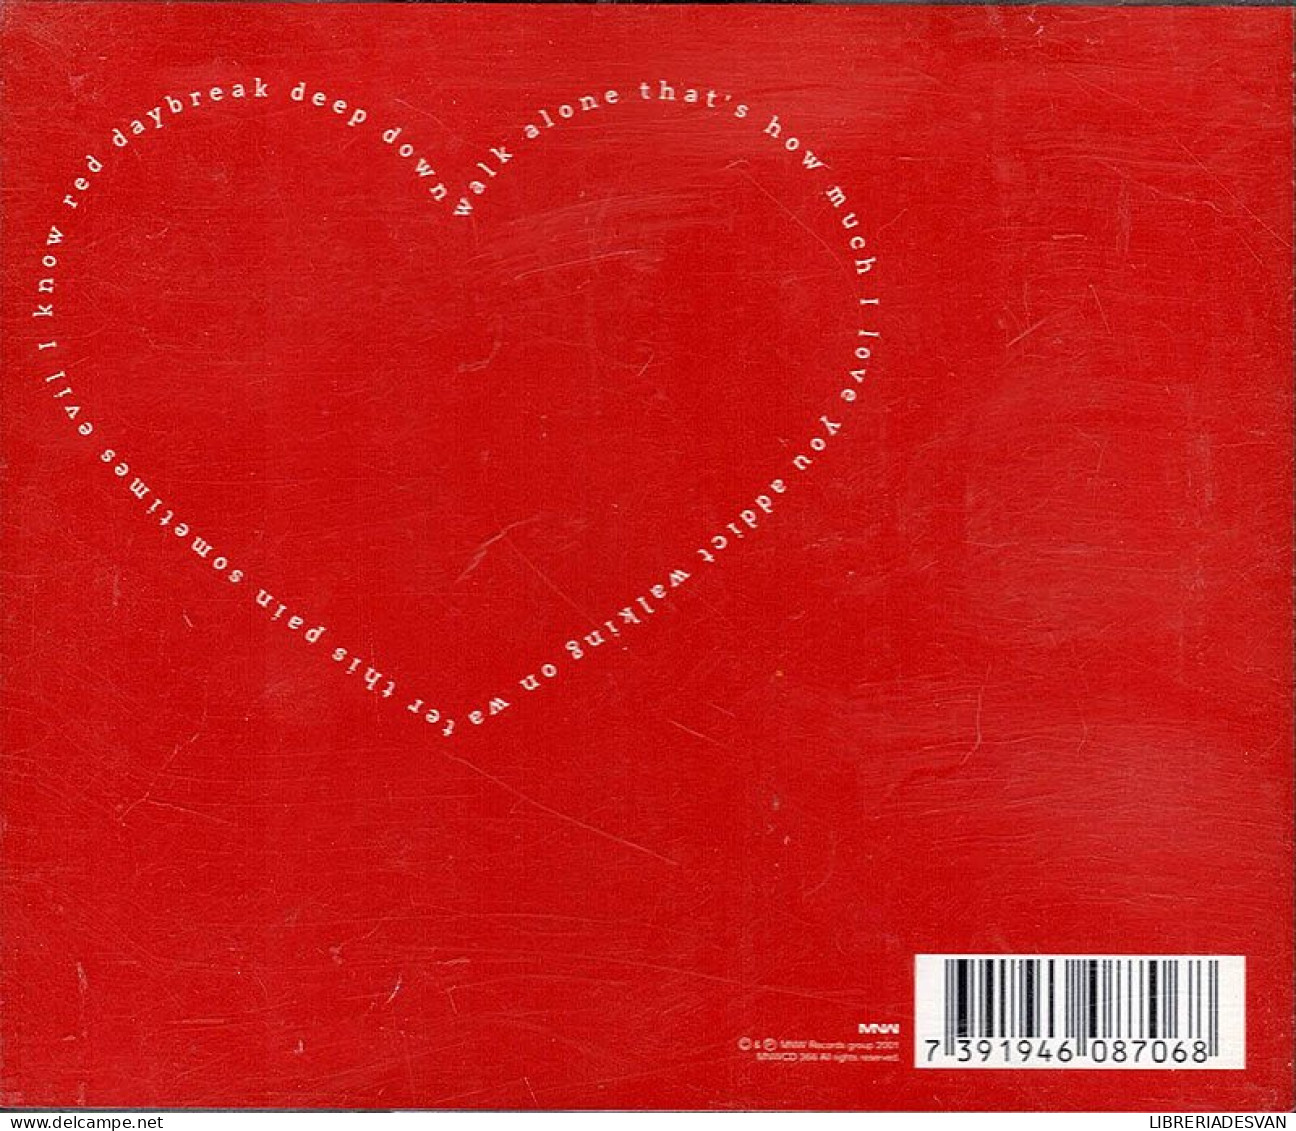 Ebba Forsberg - True Love. CD - Rock